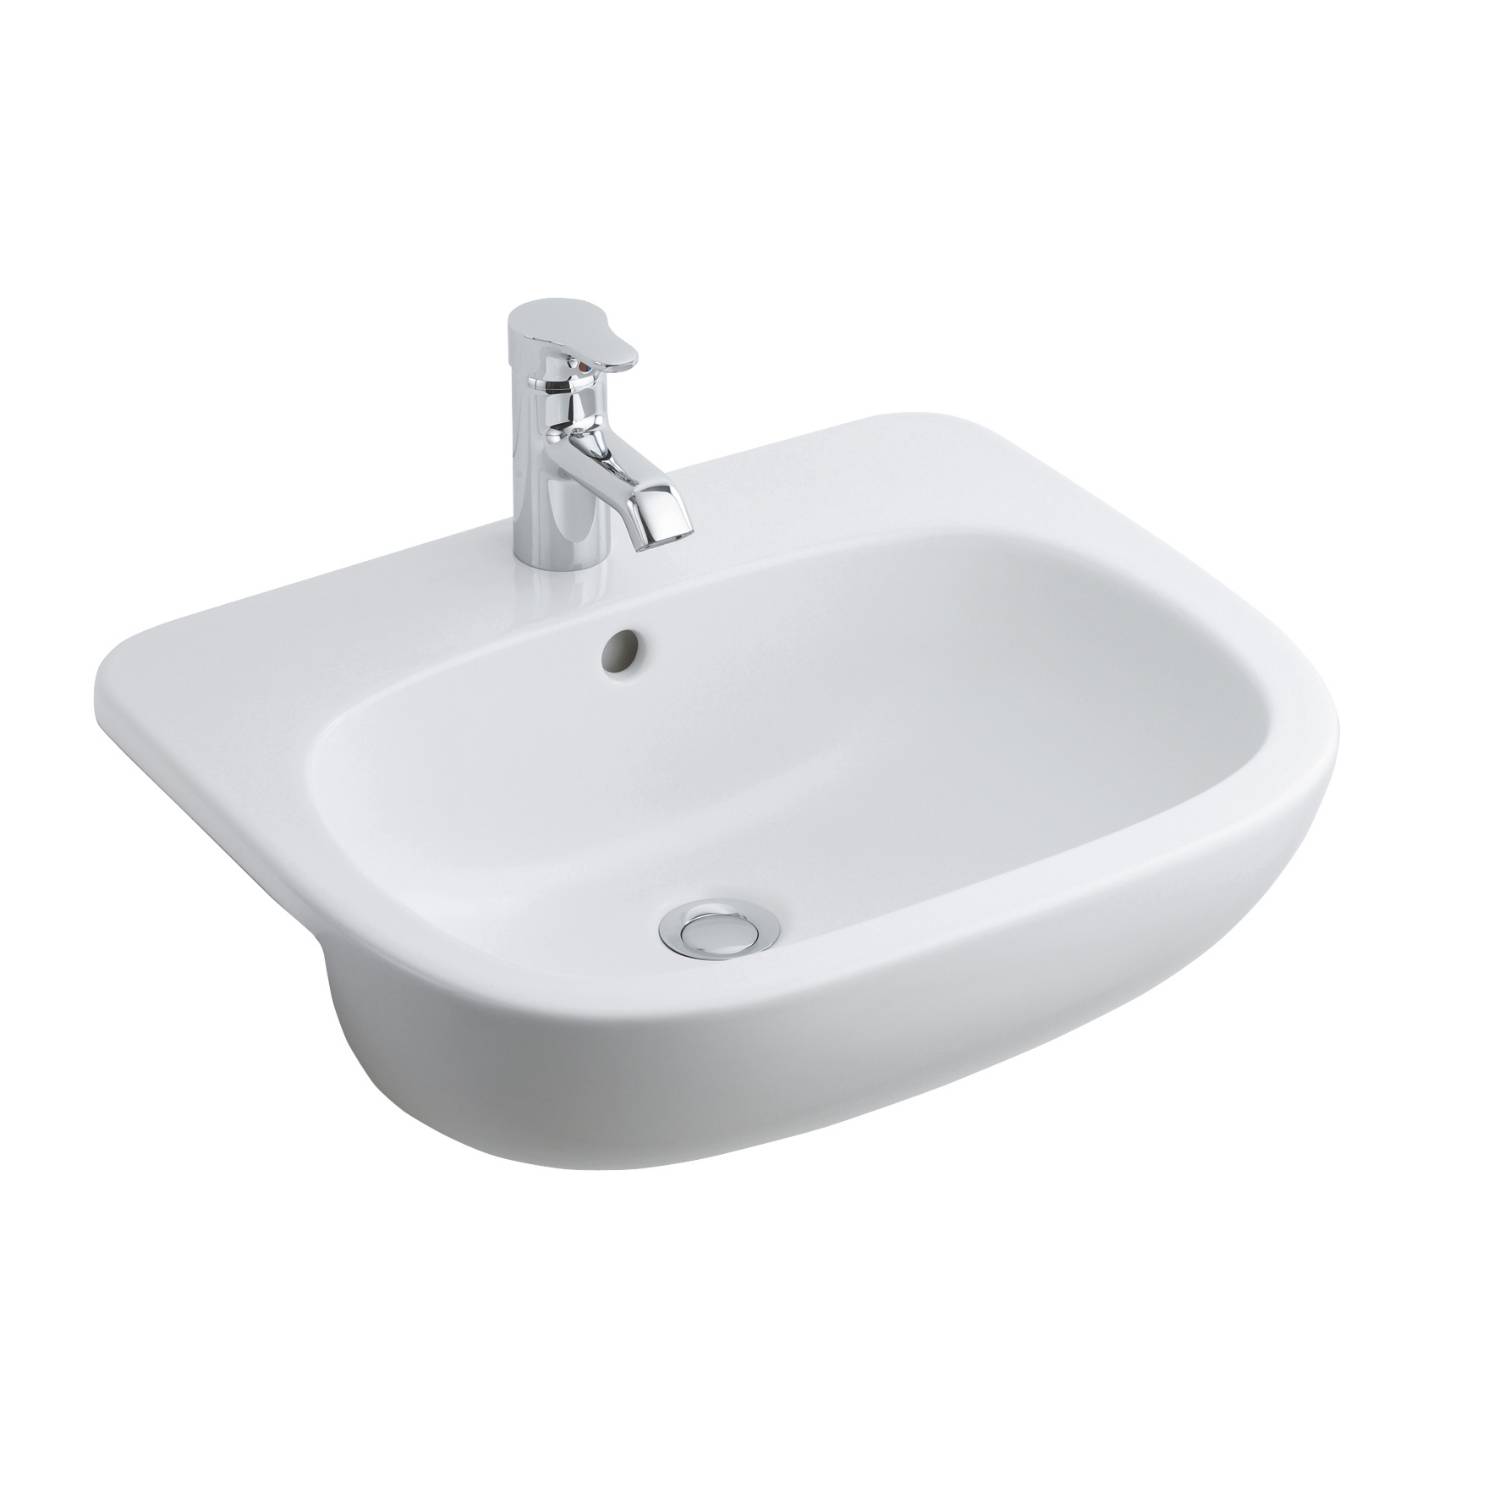 Jasper Morrison 55 cm Semi-Countertop Washbasin